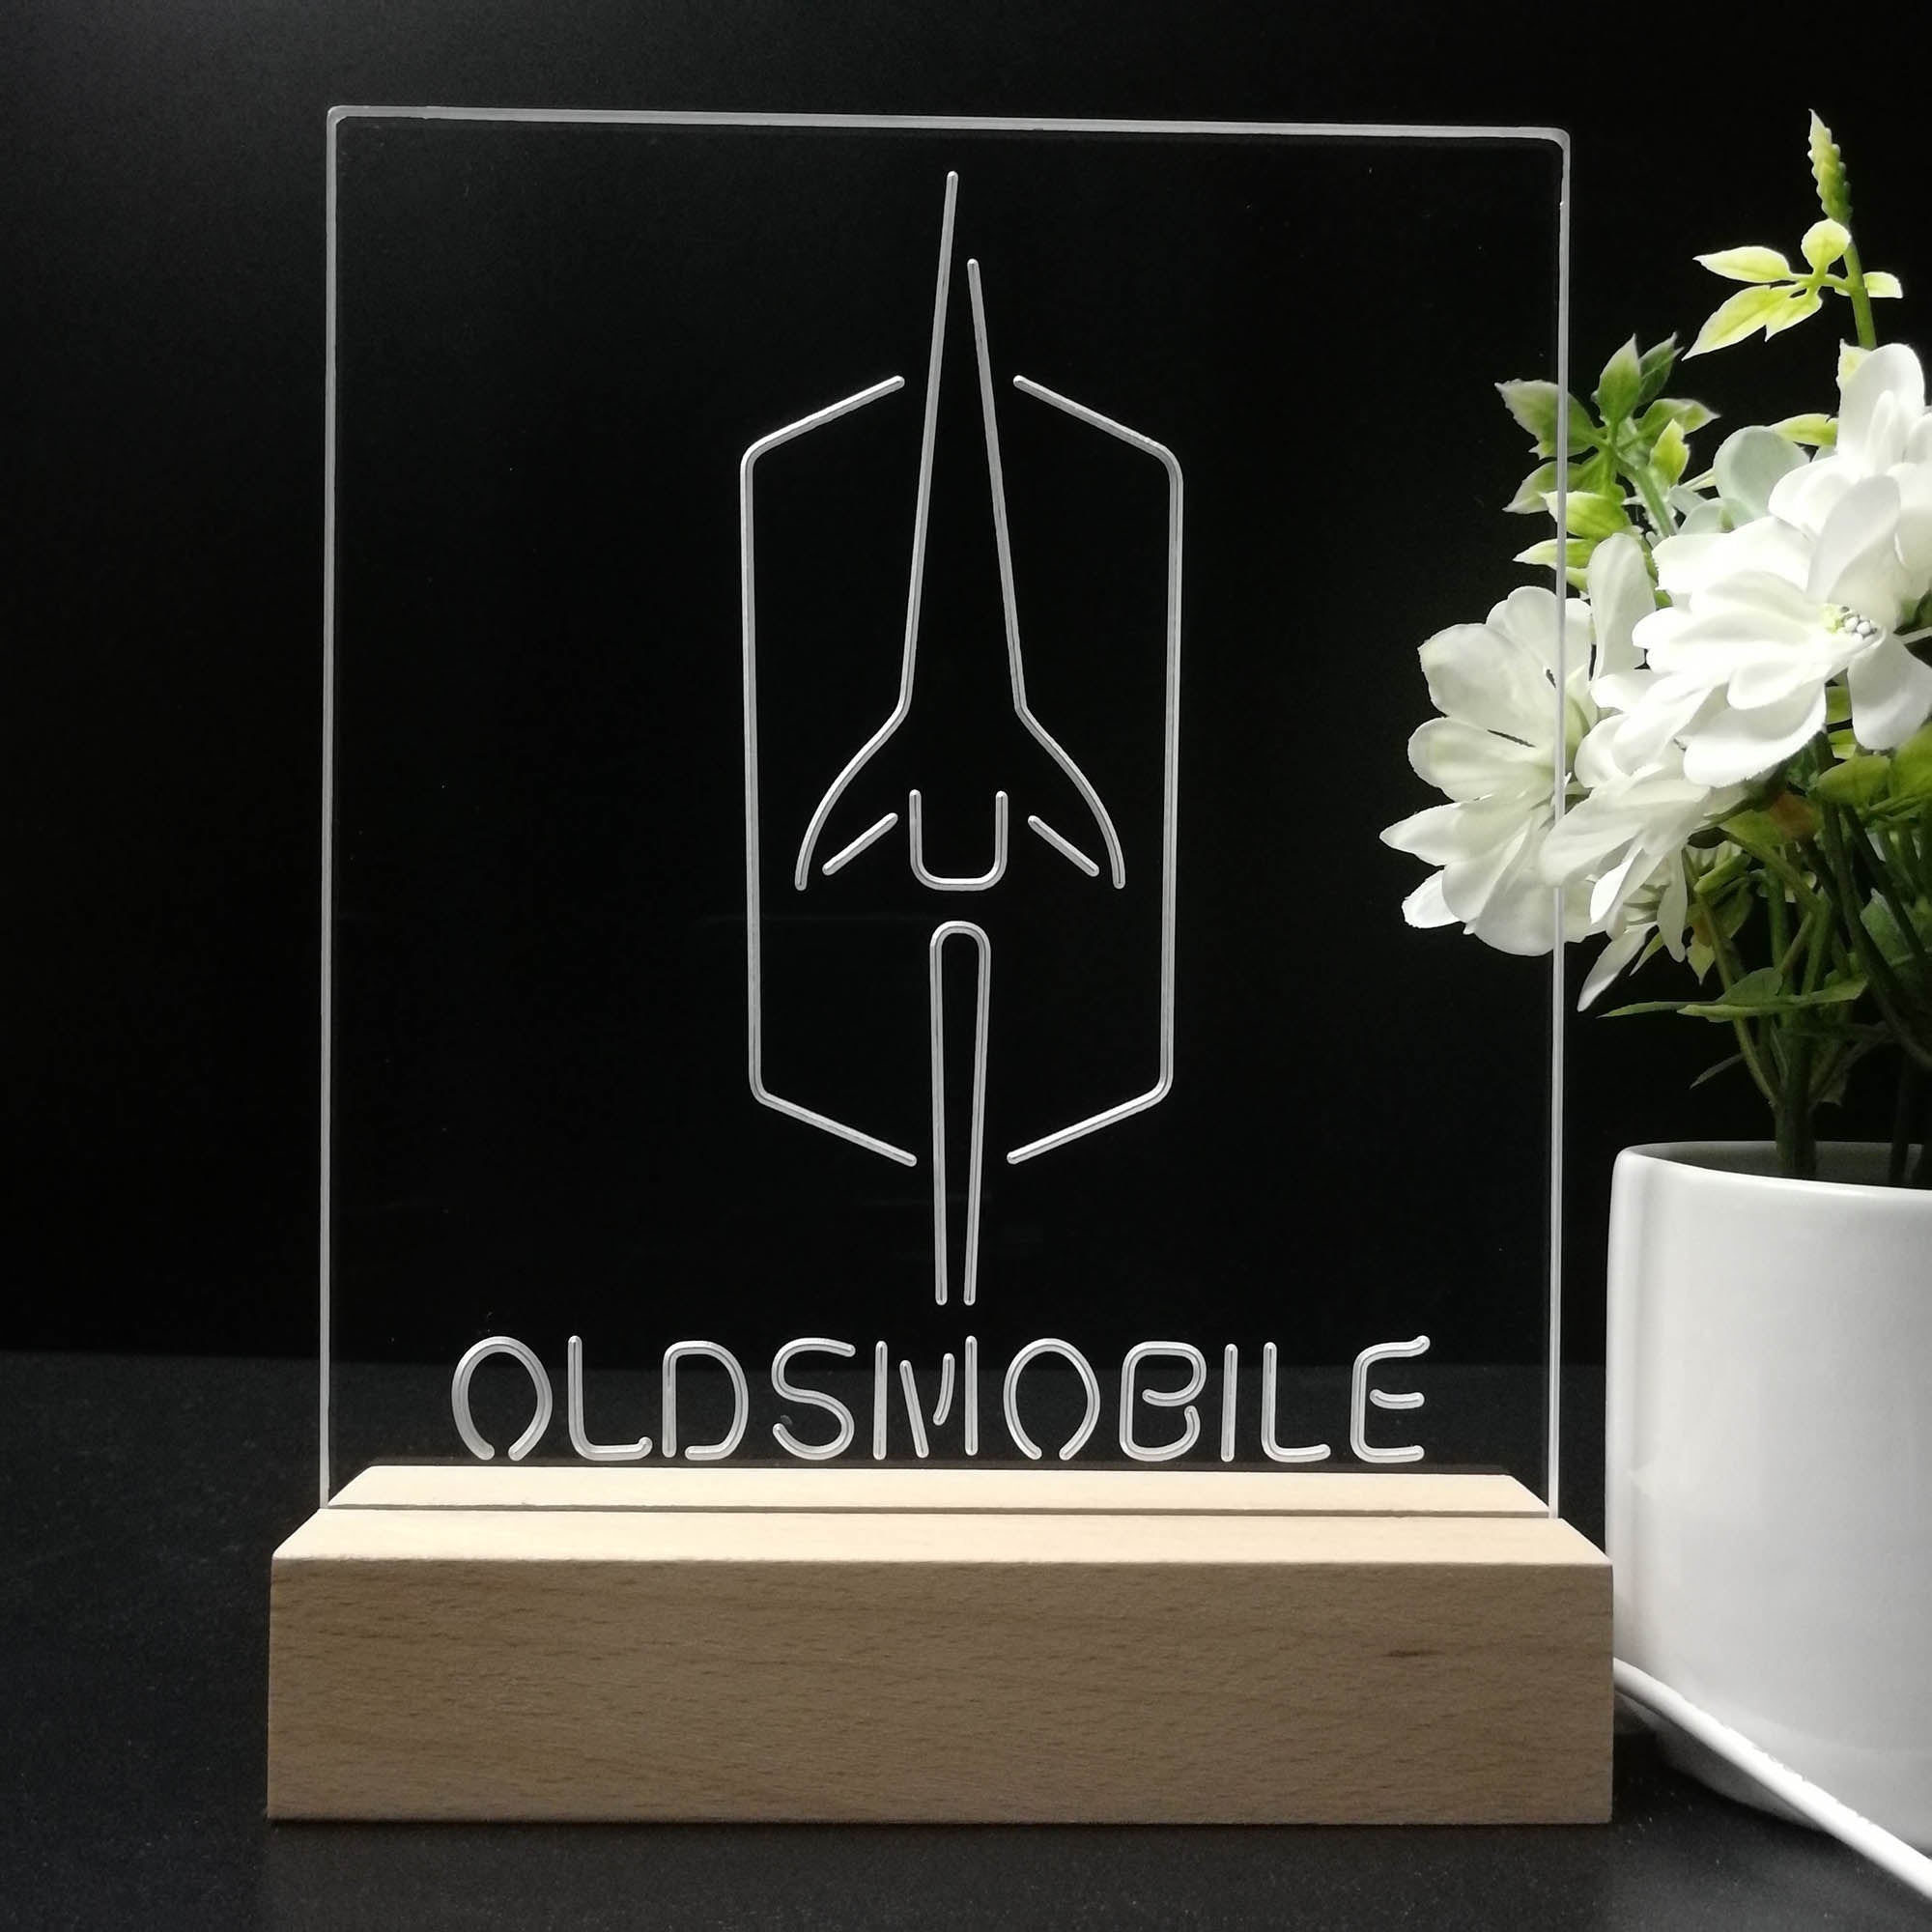 Oldsmobile 3D Illusion Night Light Desk Lamp